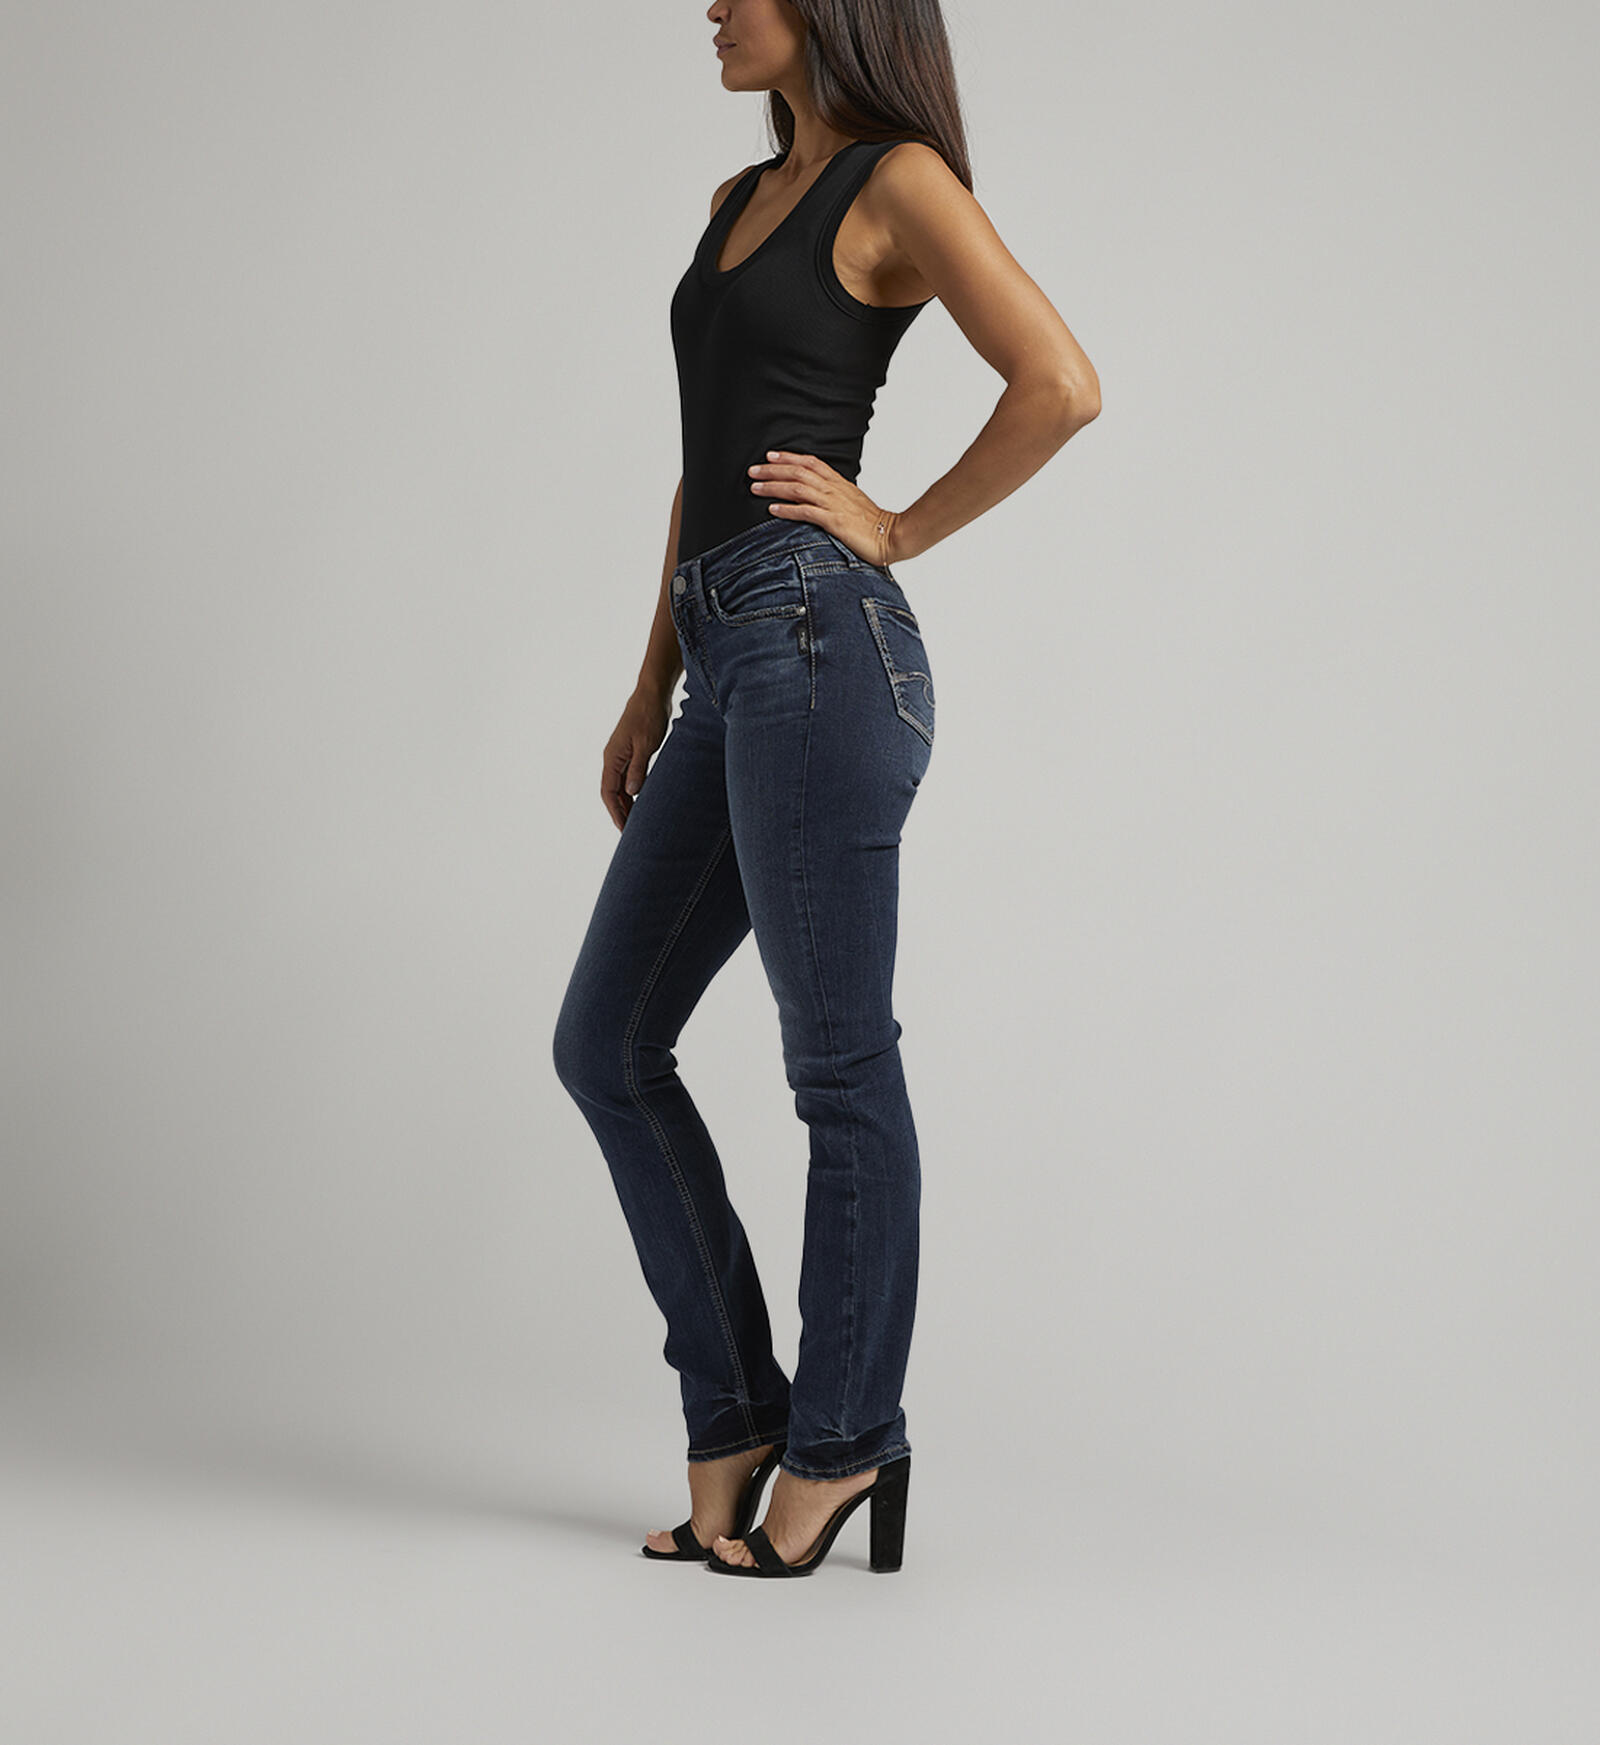 Denim Co Jeans Womens 28 Black Super Skinny Ultra Soft Dark Wash Mid Rise